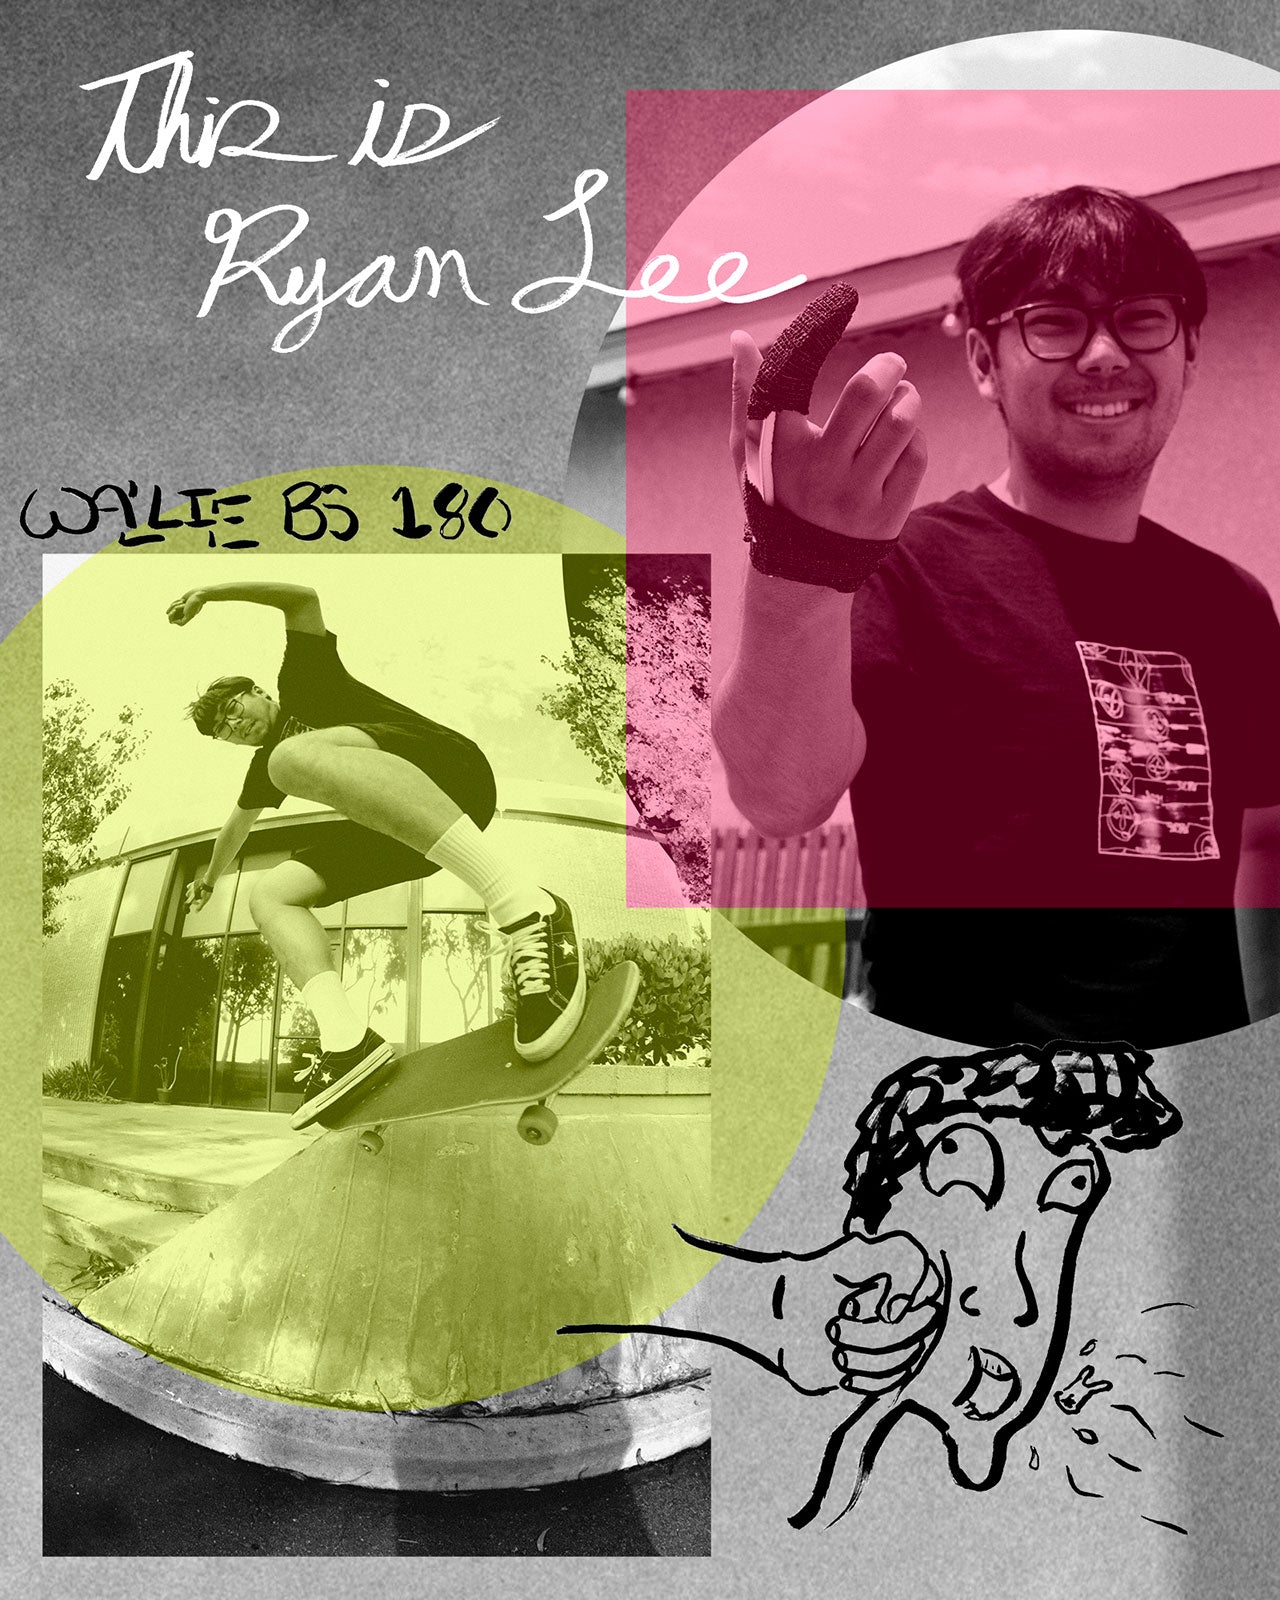 Ryan Lee skateboarding